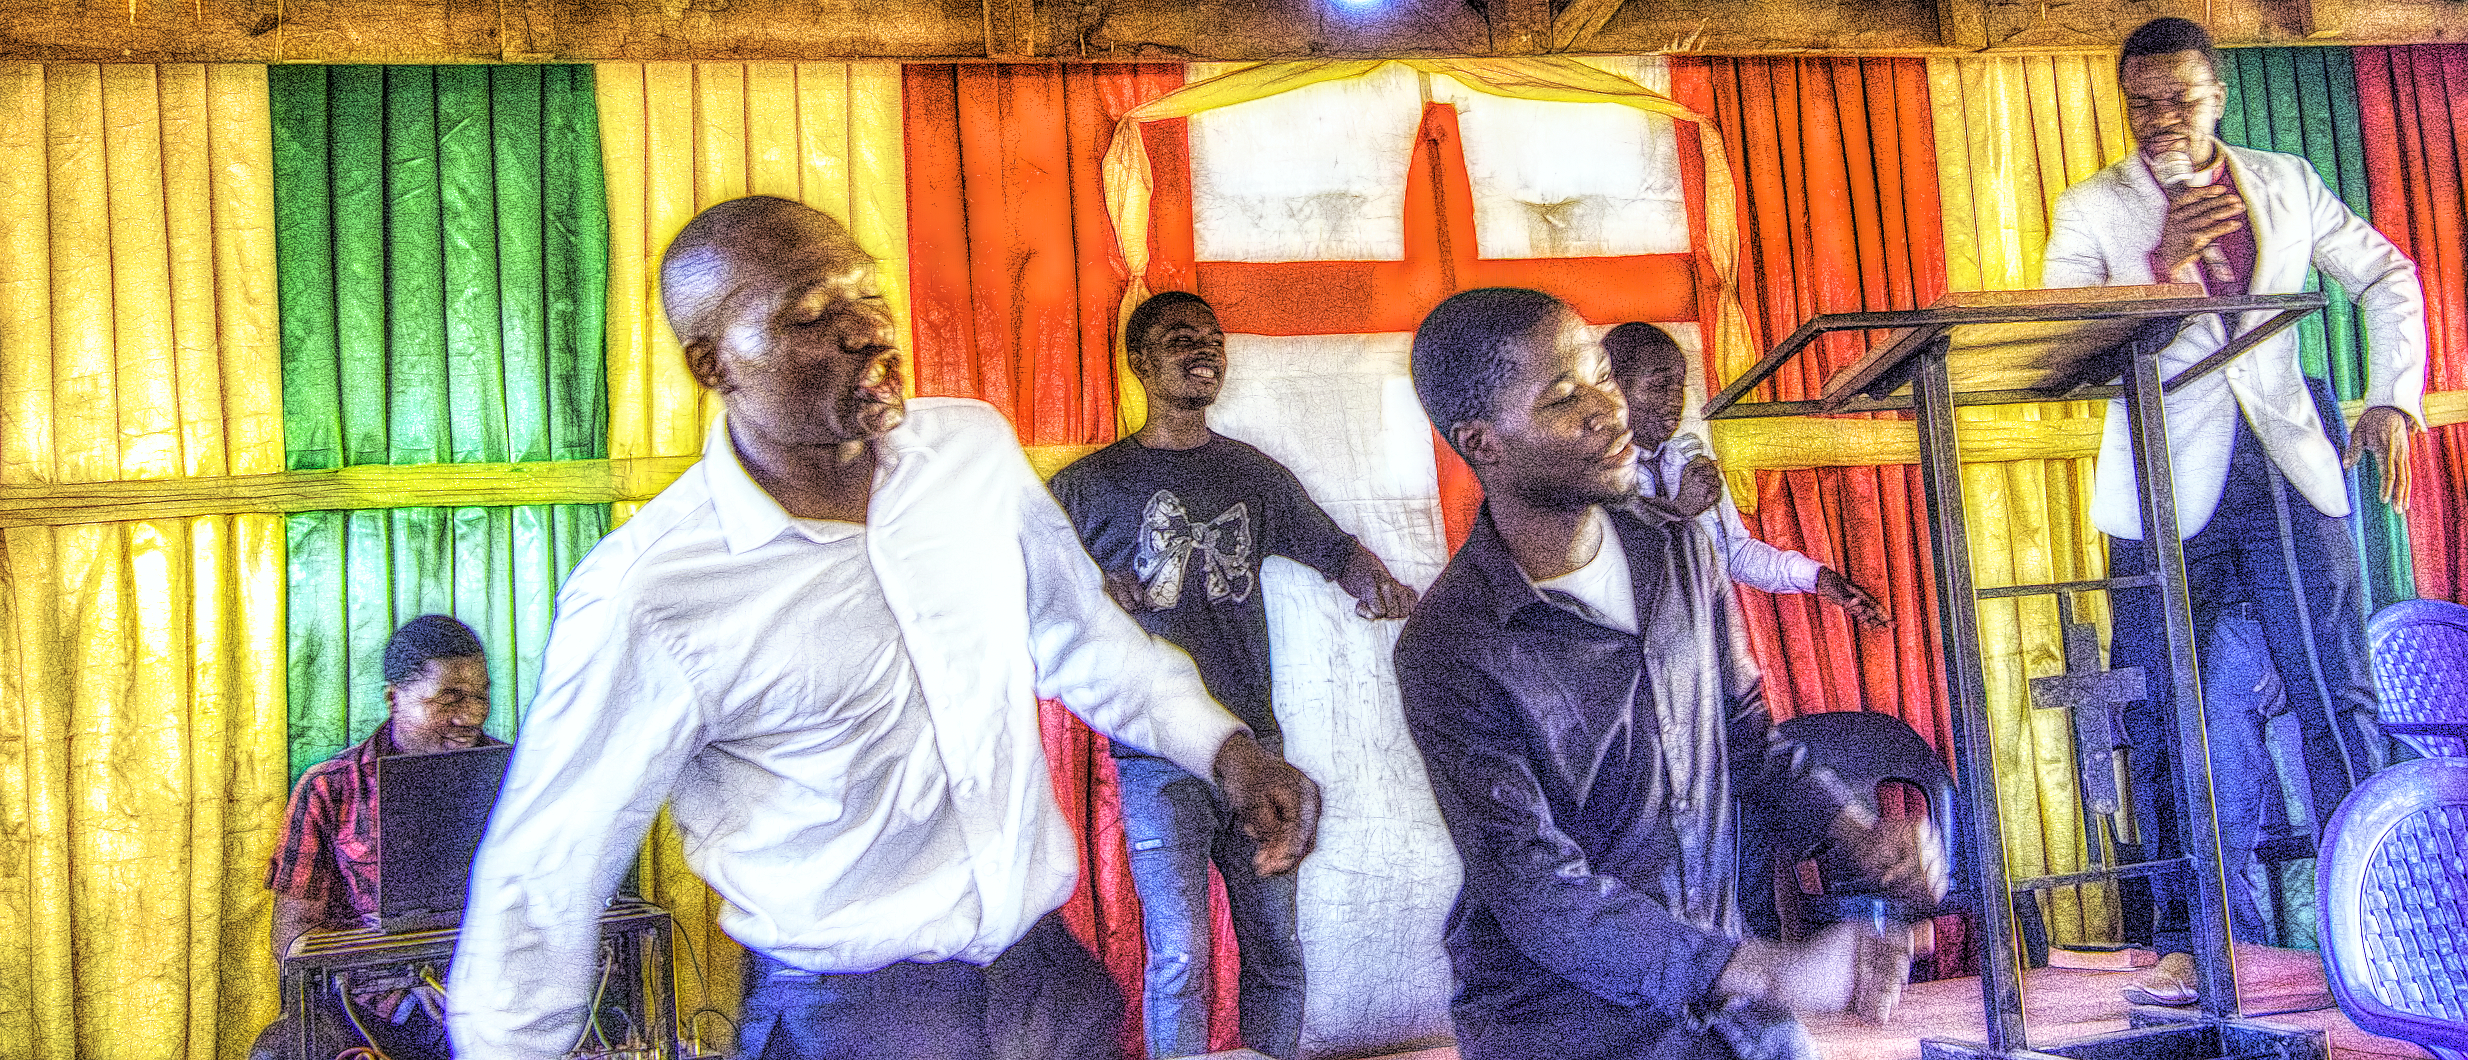 Men leading in singing at a church in Lilongwe, Malawi